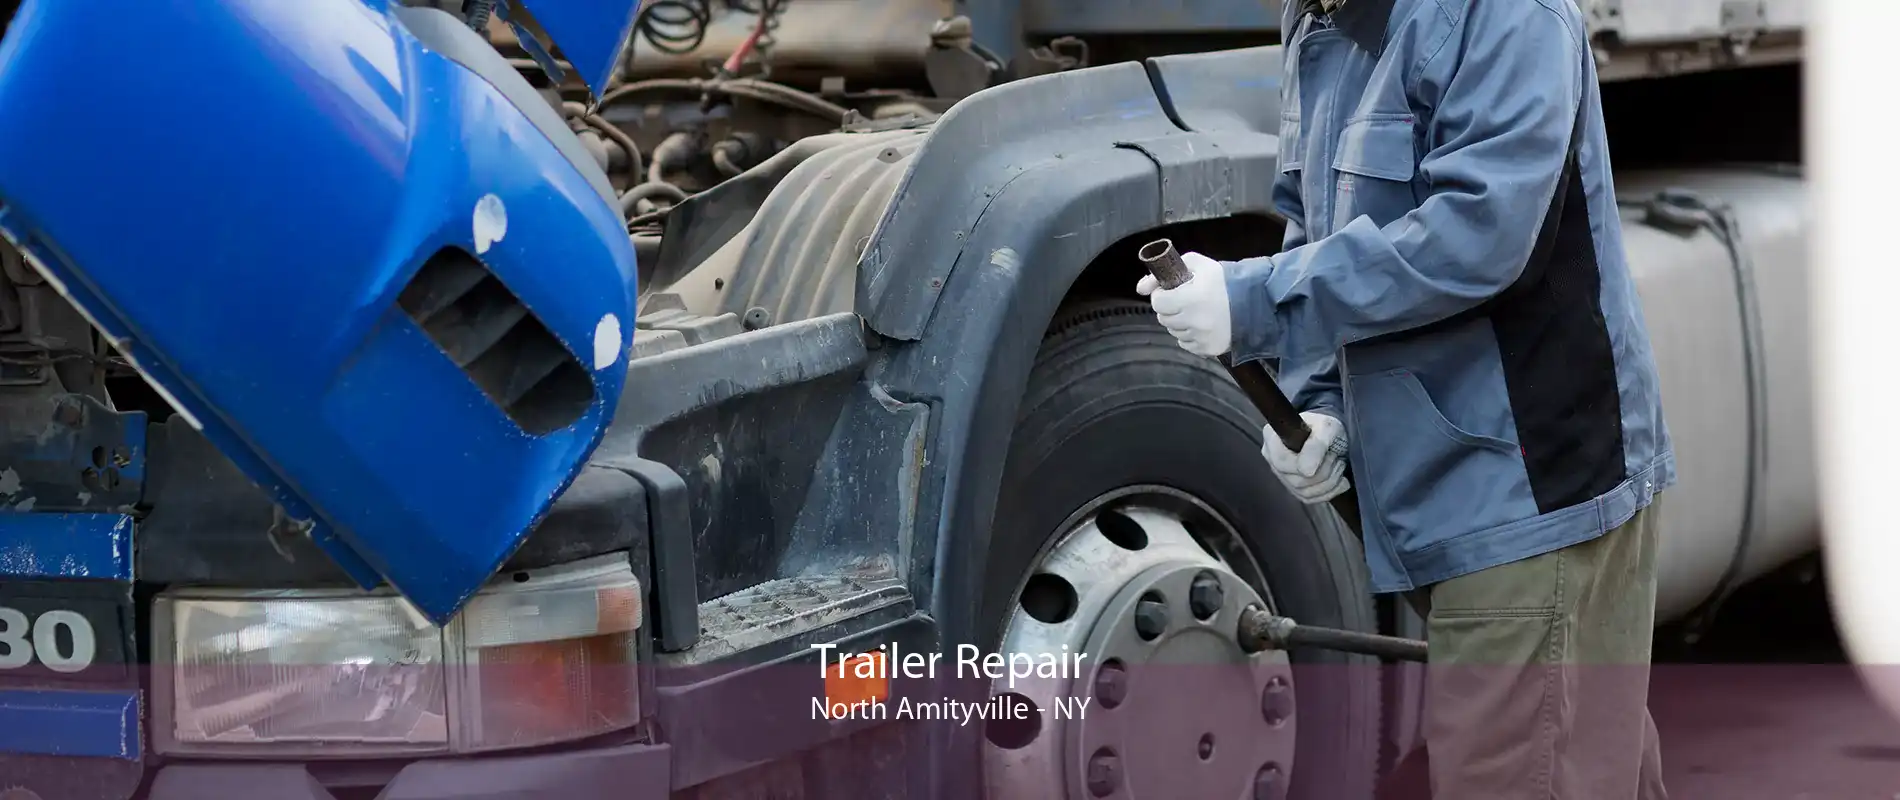 Trailer Repair North Amityville - NY